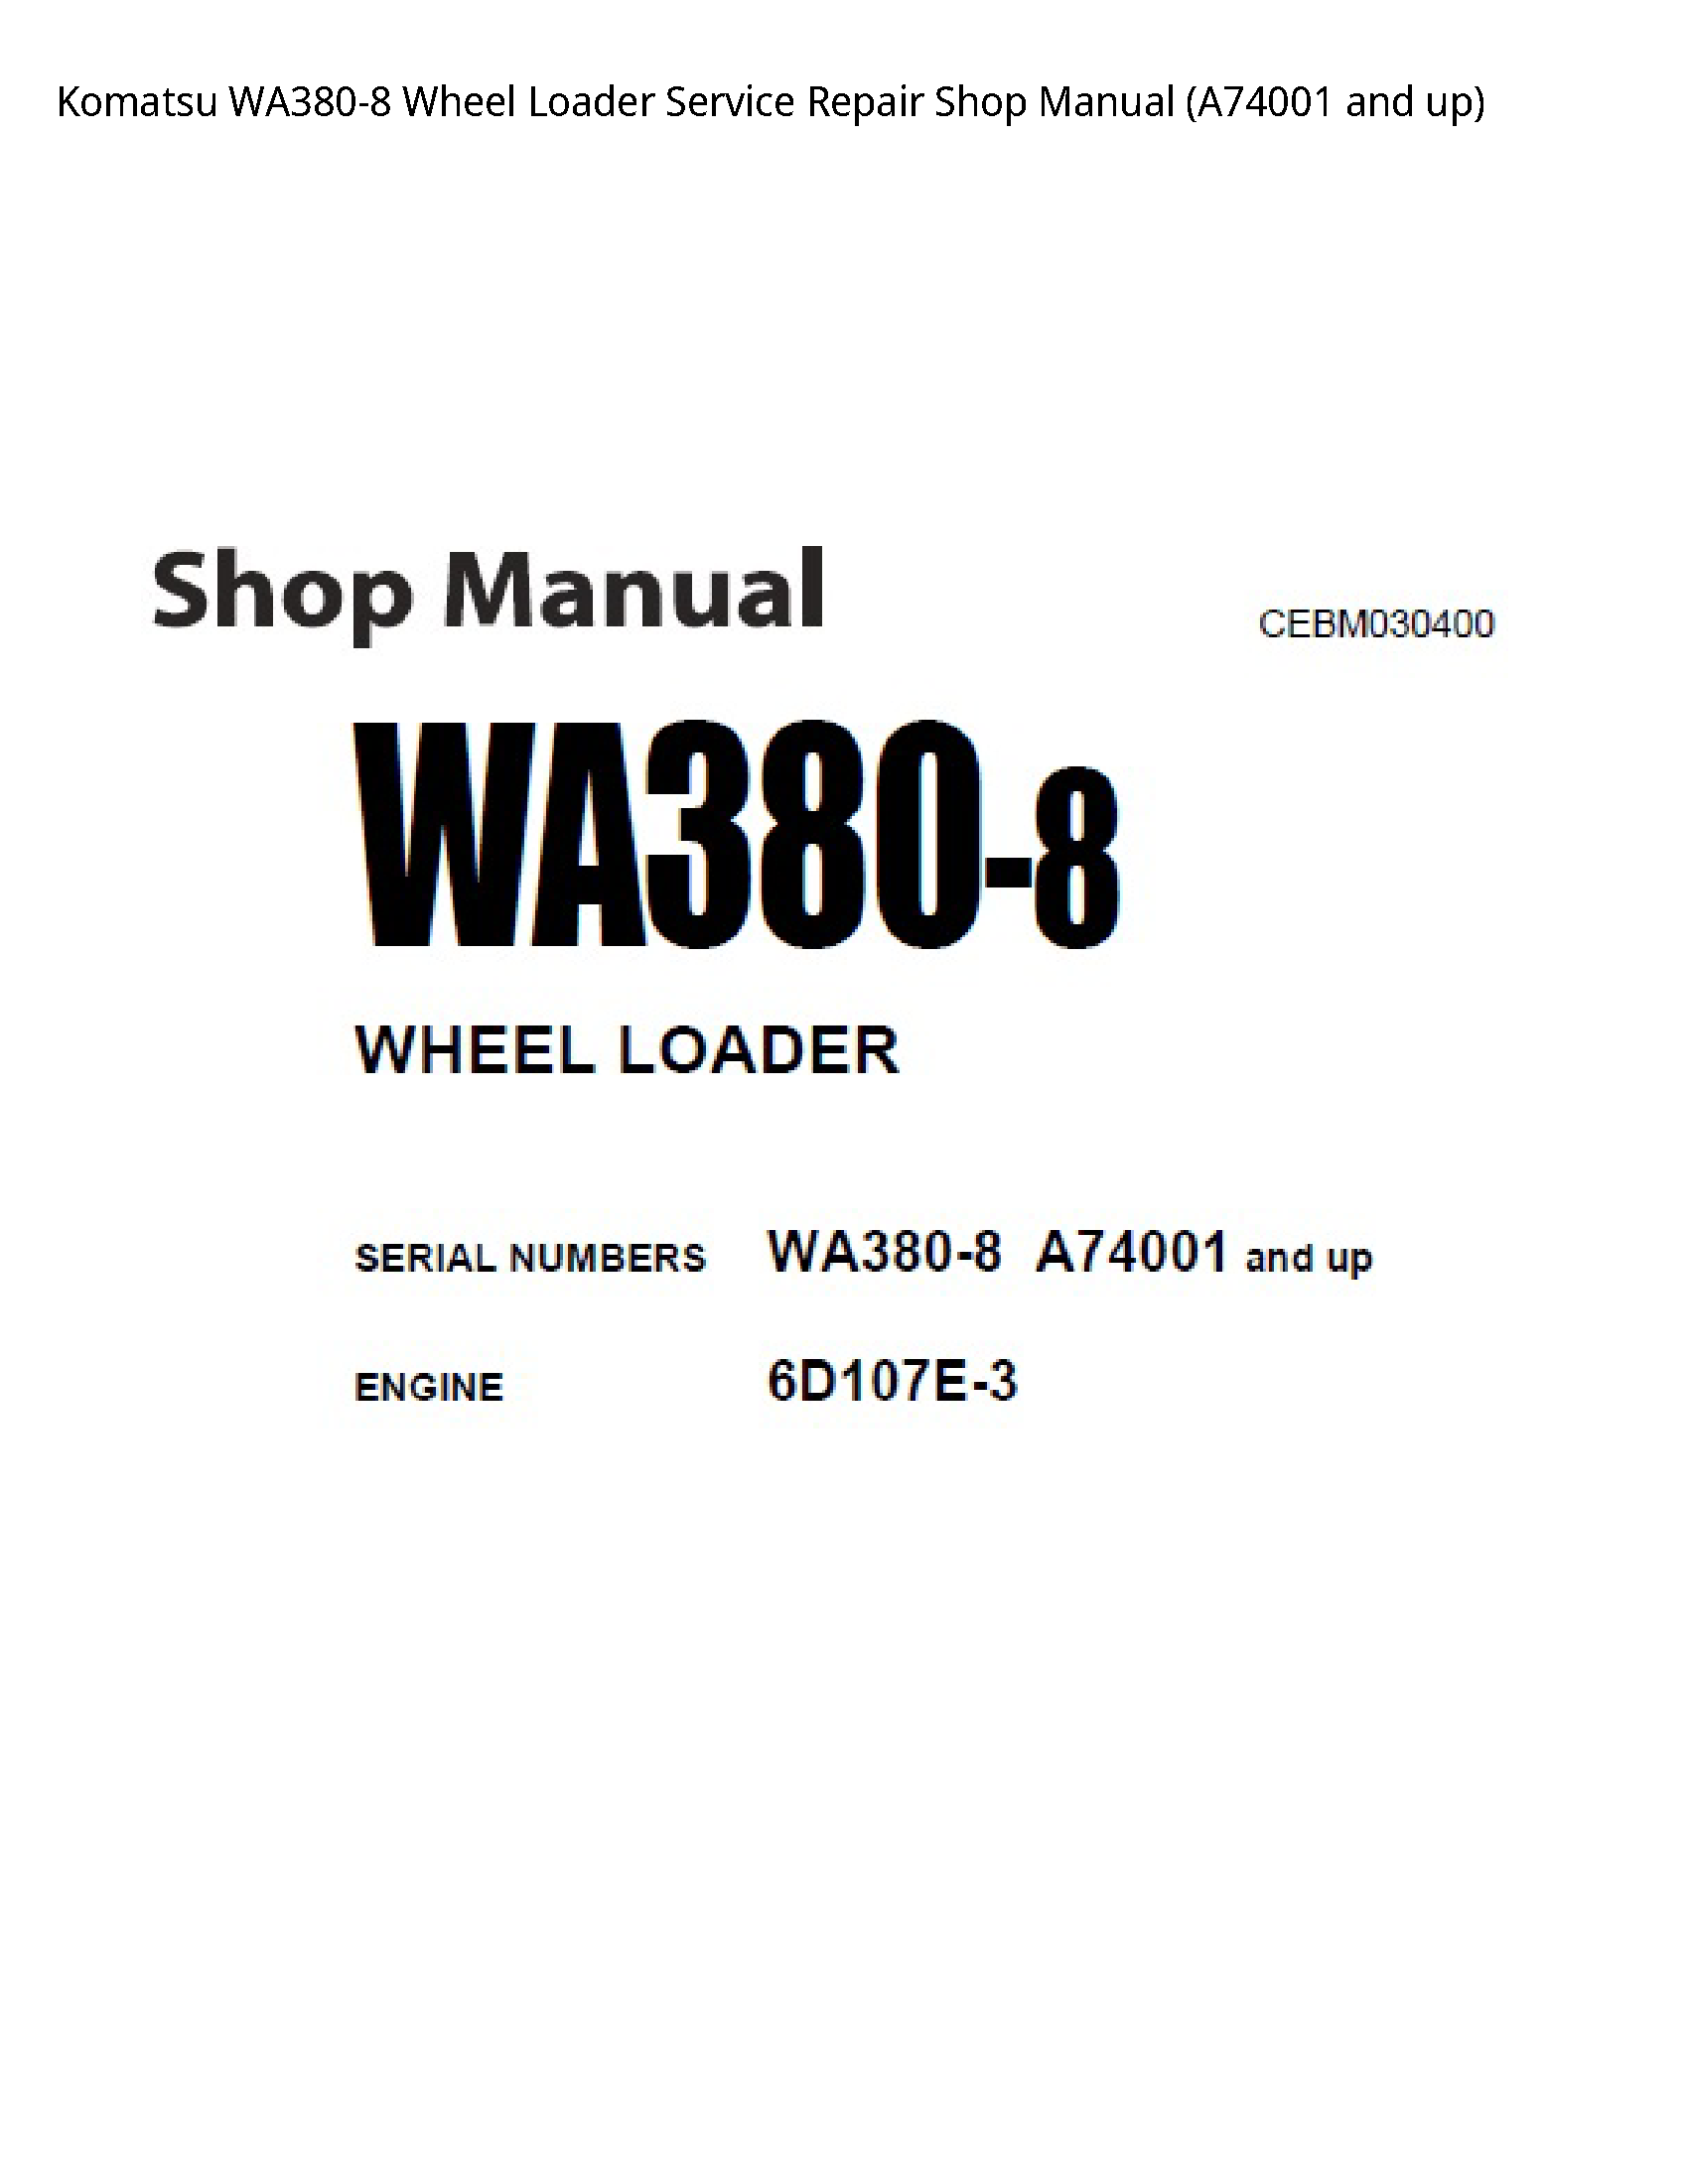 KOMATSU WA380-8 Wheel Loader manual